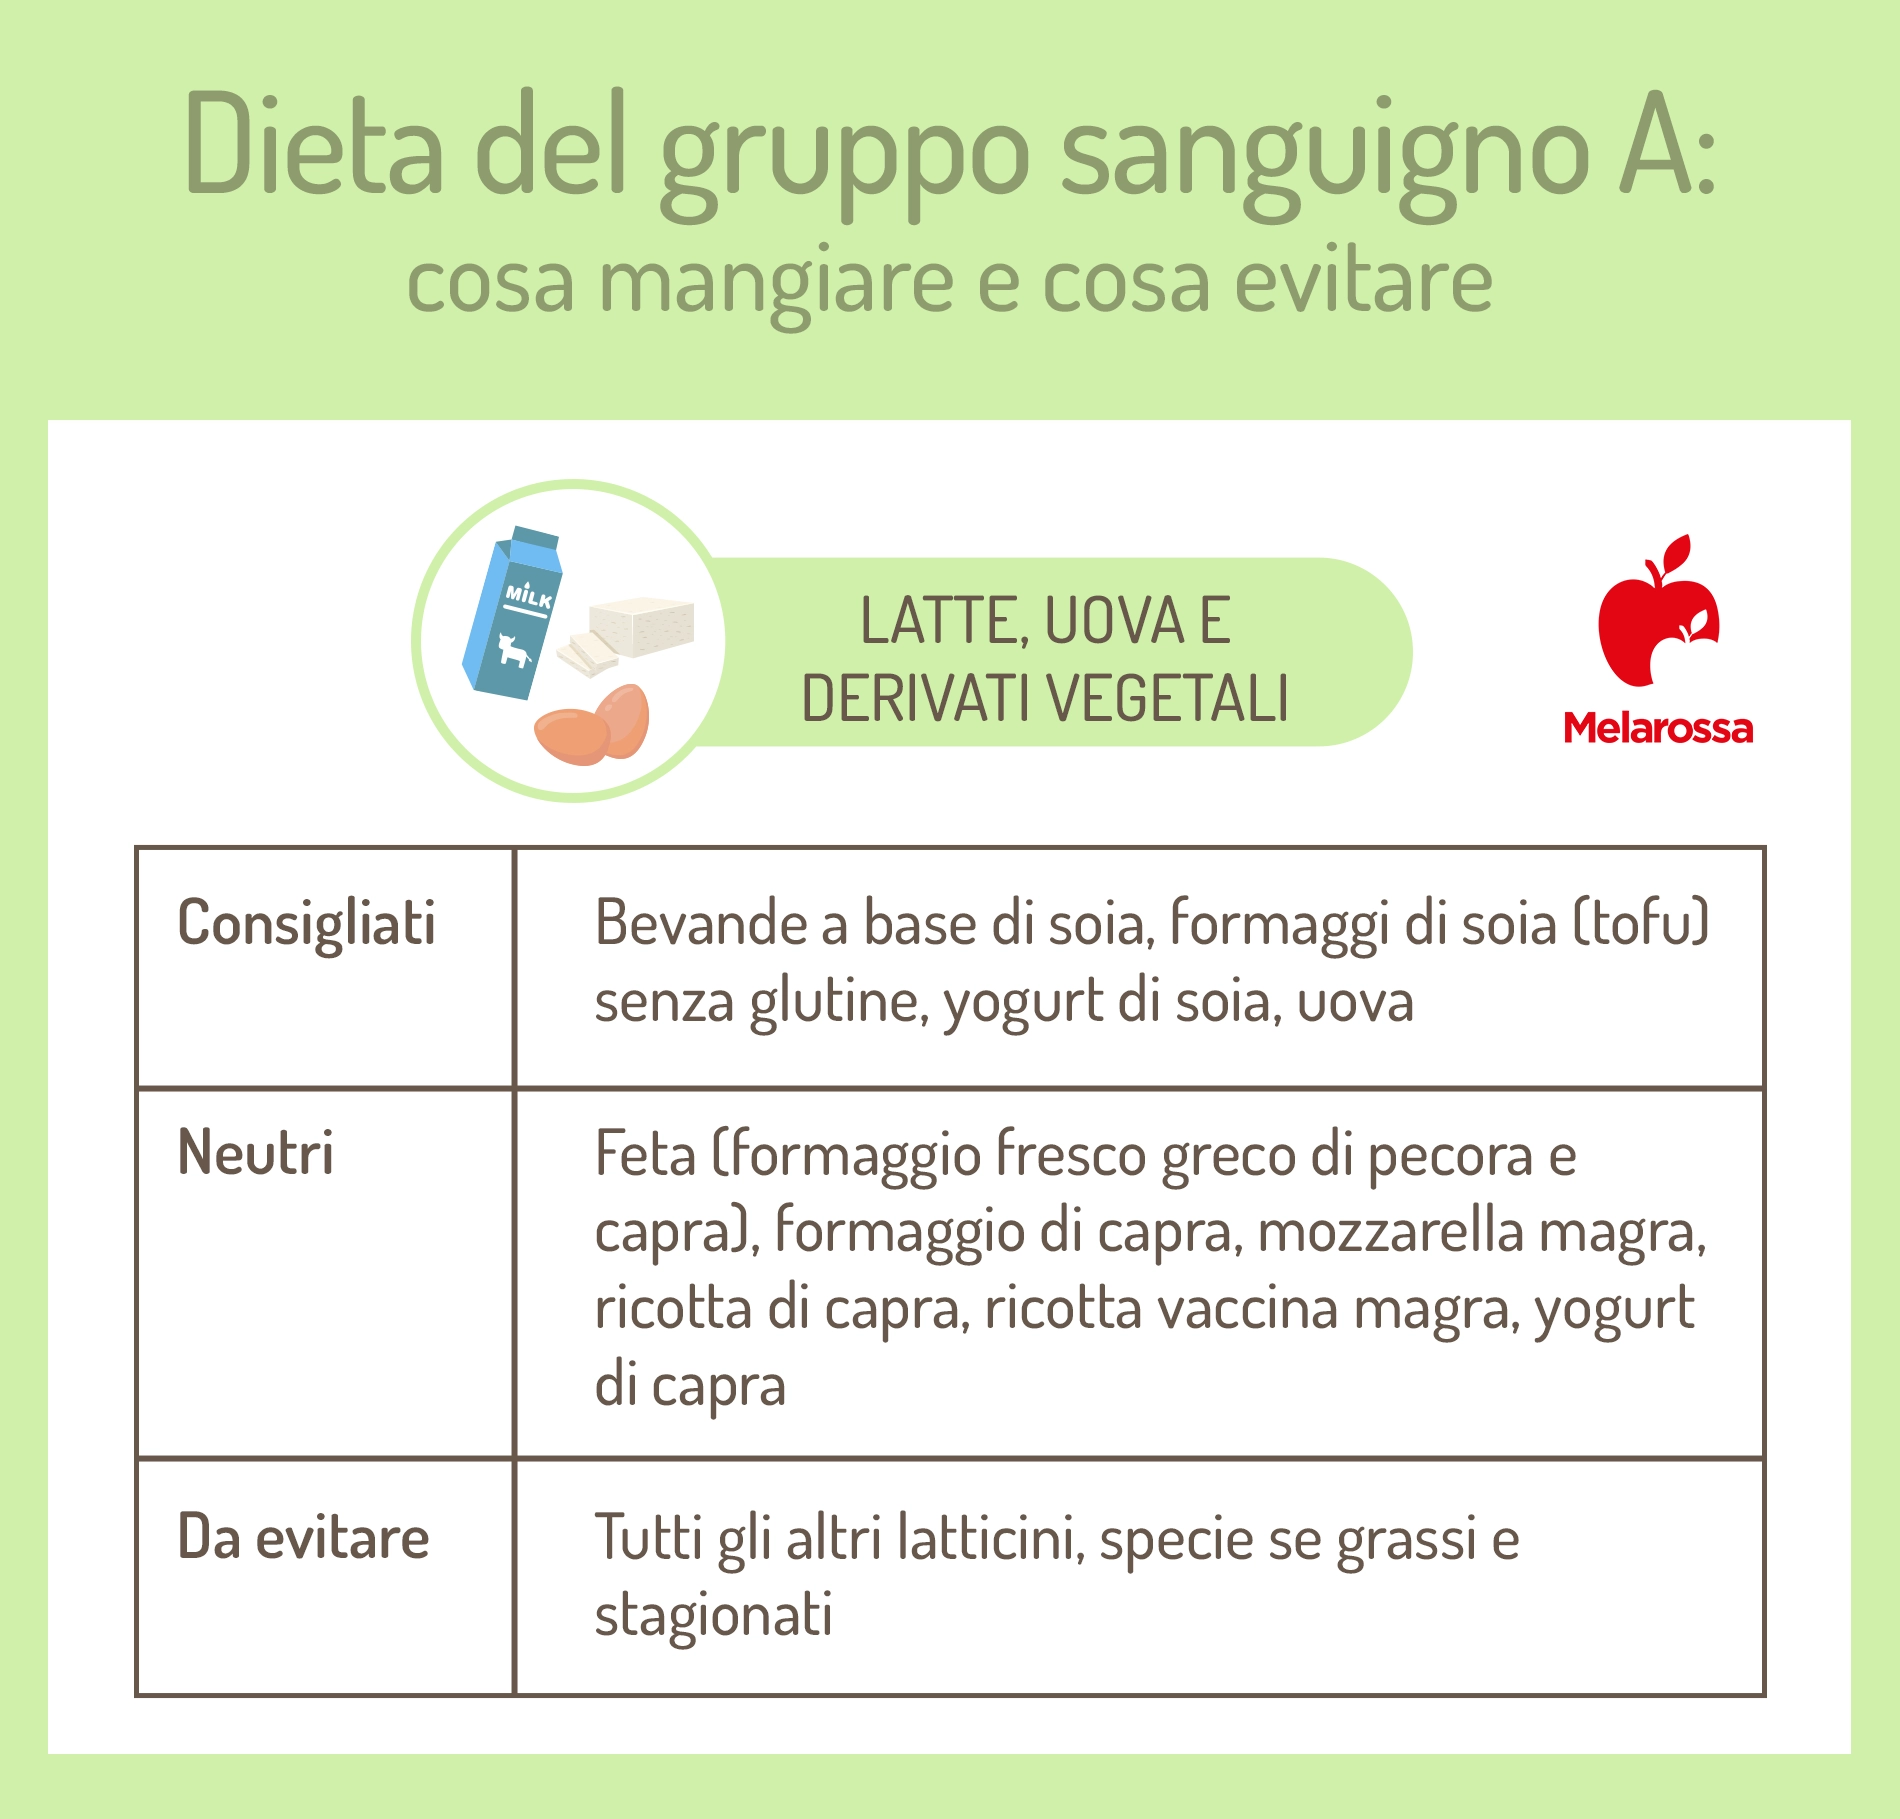 dieta gruppo sangugno A: latte, uova e derivati vegetali